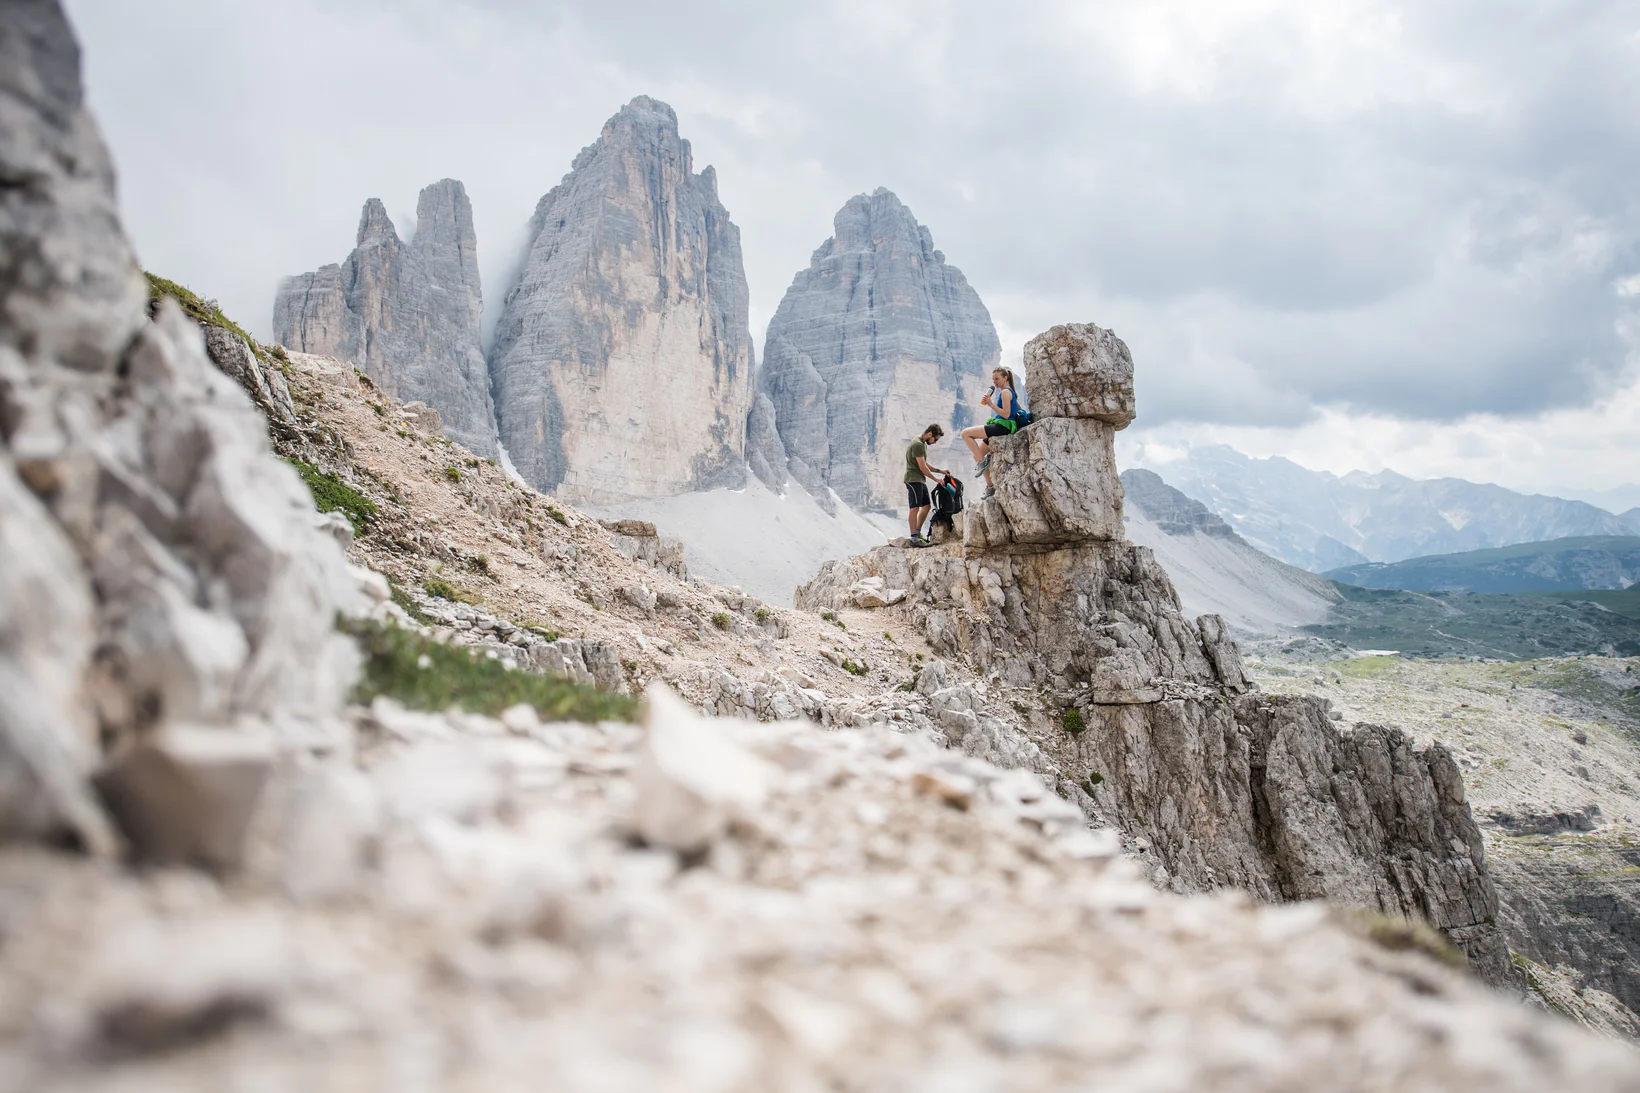 Two people taking a break on the mountain